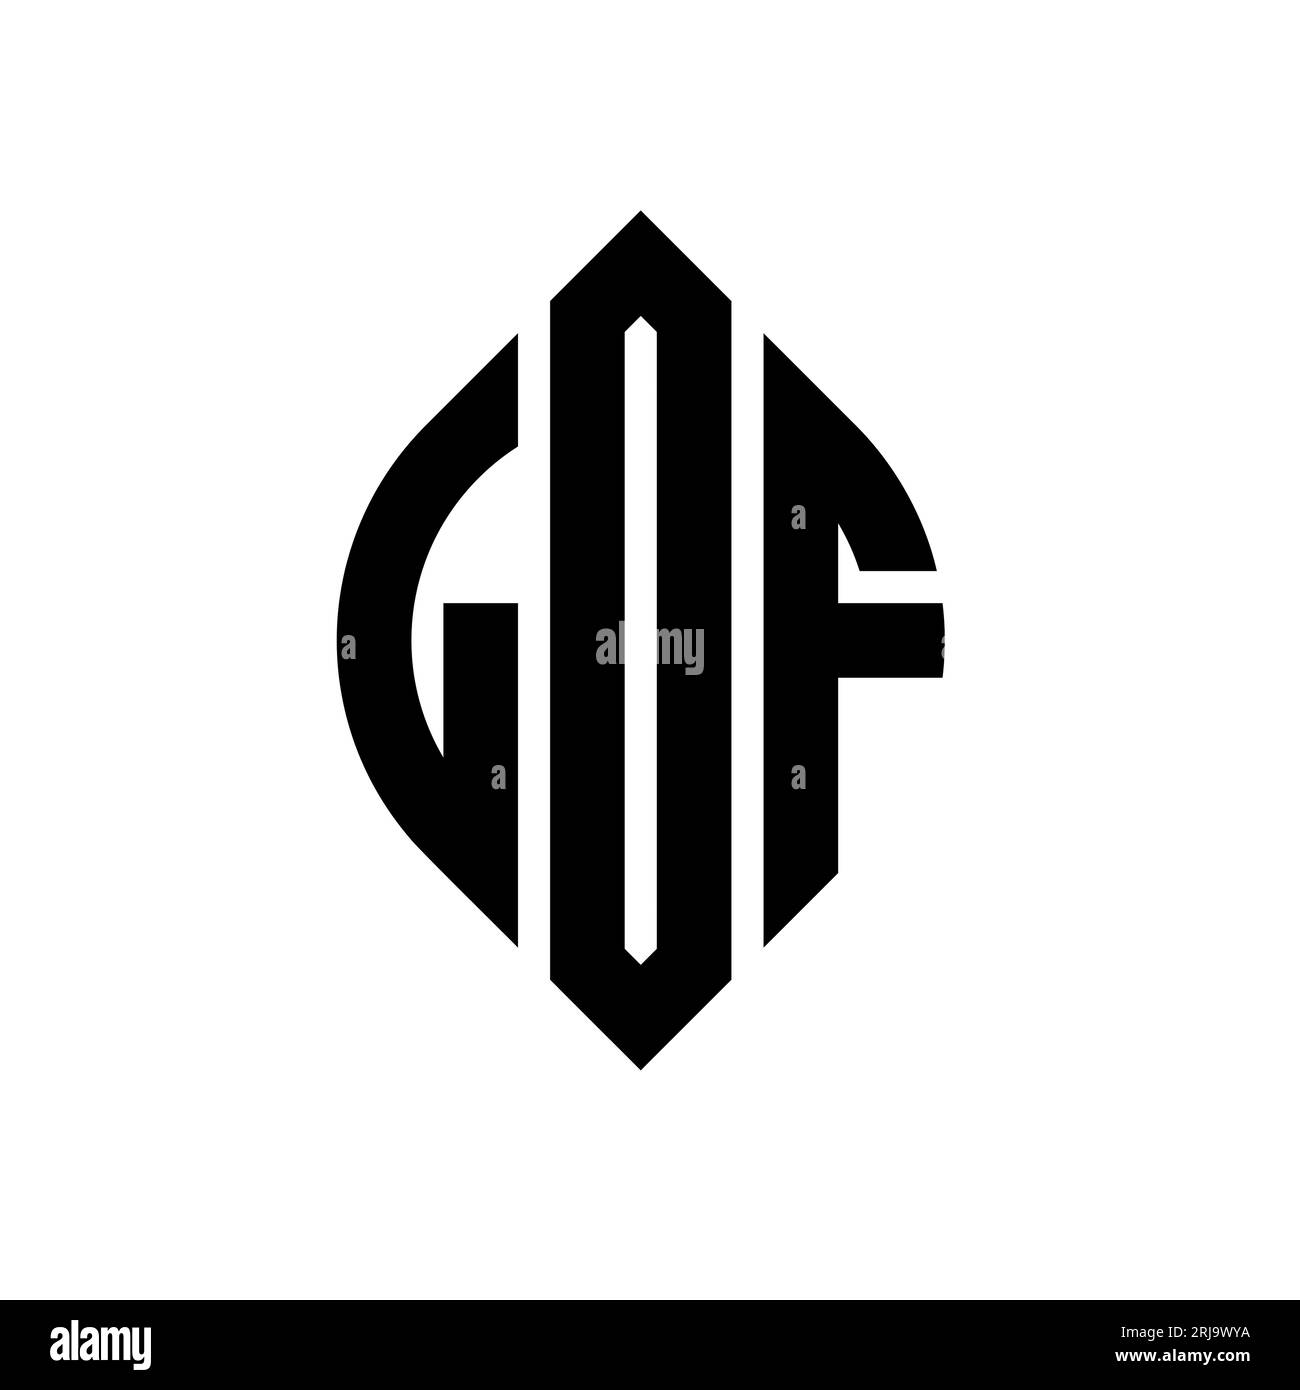 LDF letter logo design on White background. LDF creative initials